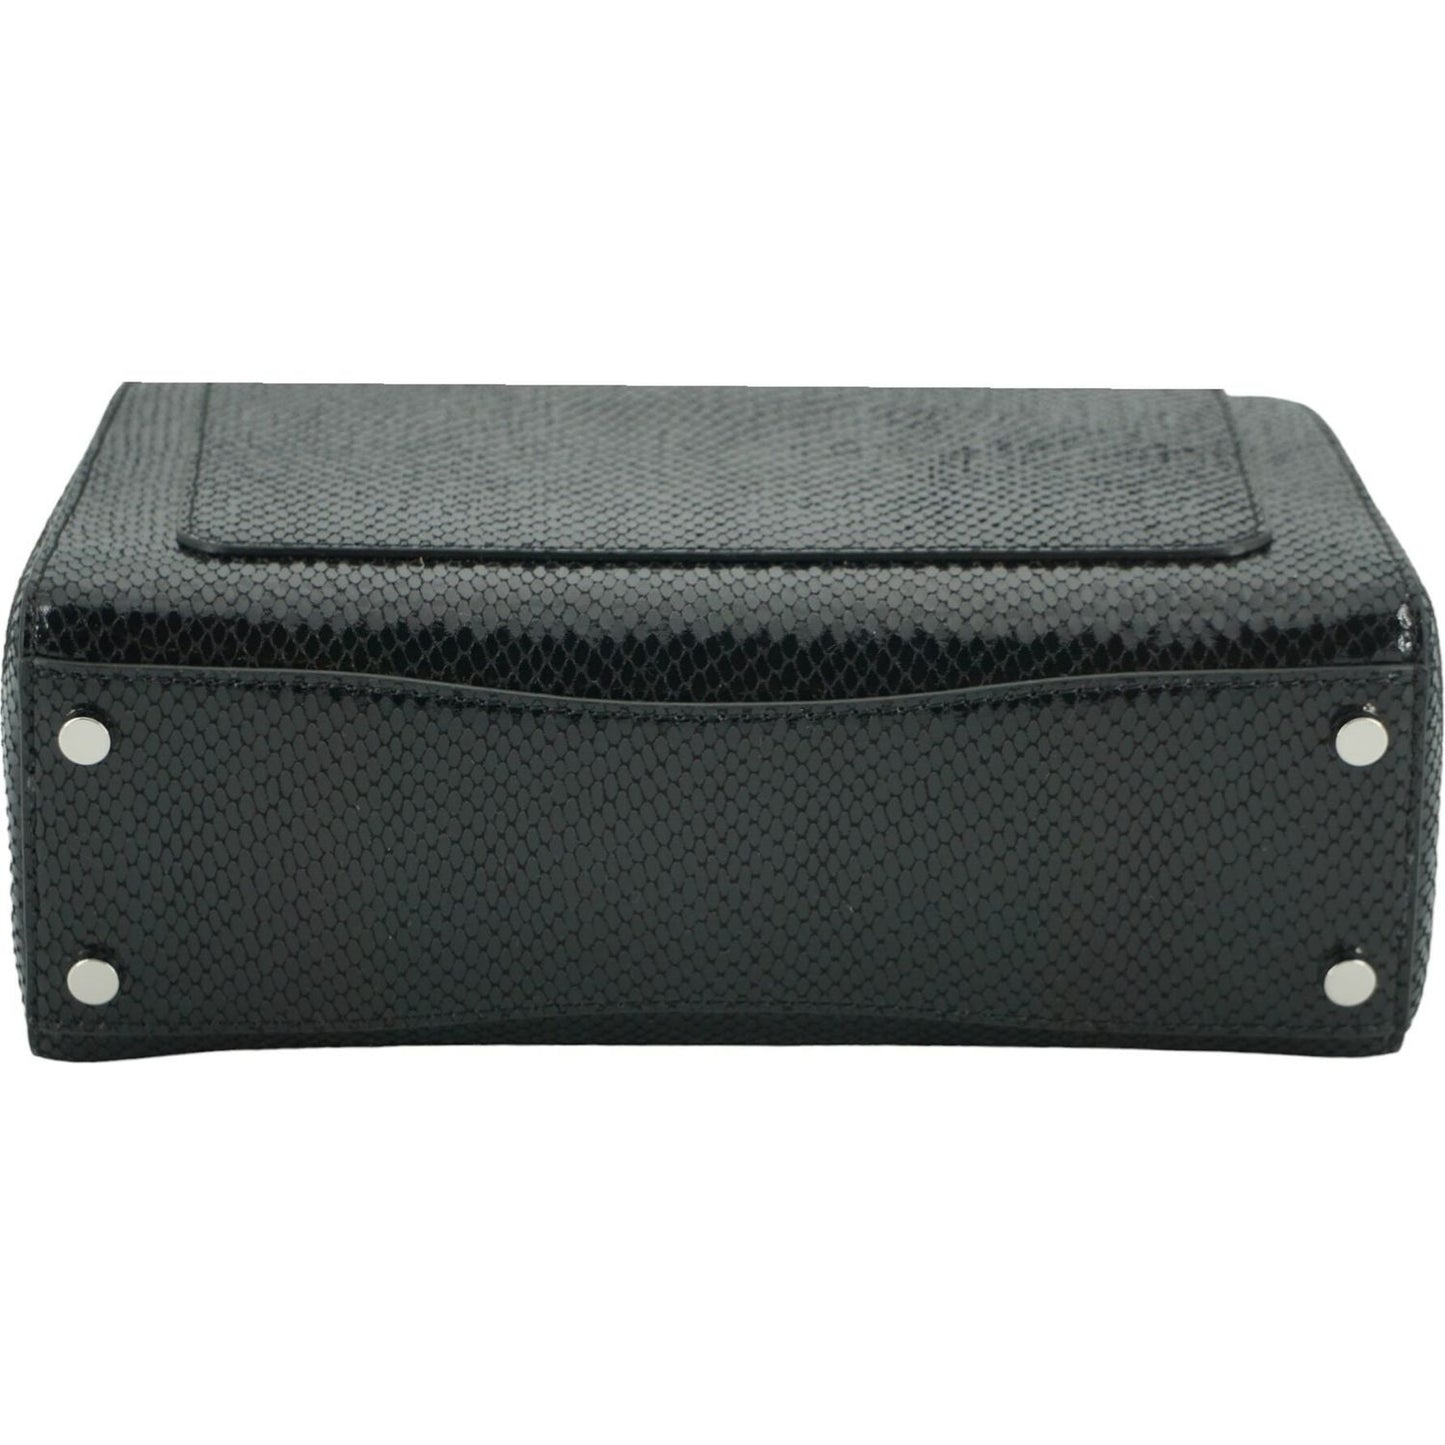 Jimmy Choo Black Leather Top Handle Shoulder Bag black-leather-top-handle-shoulder-bag-1